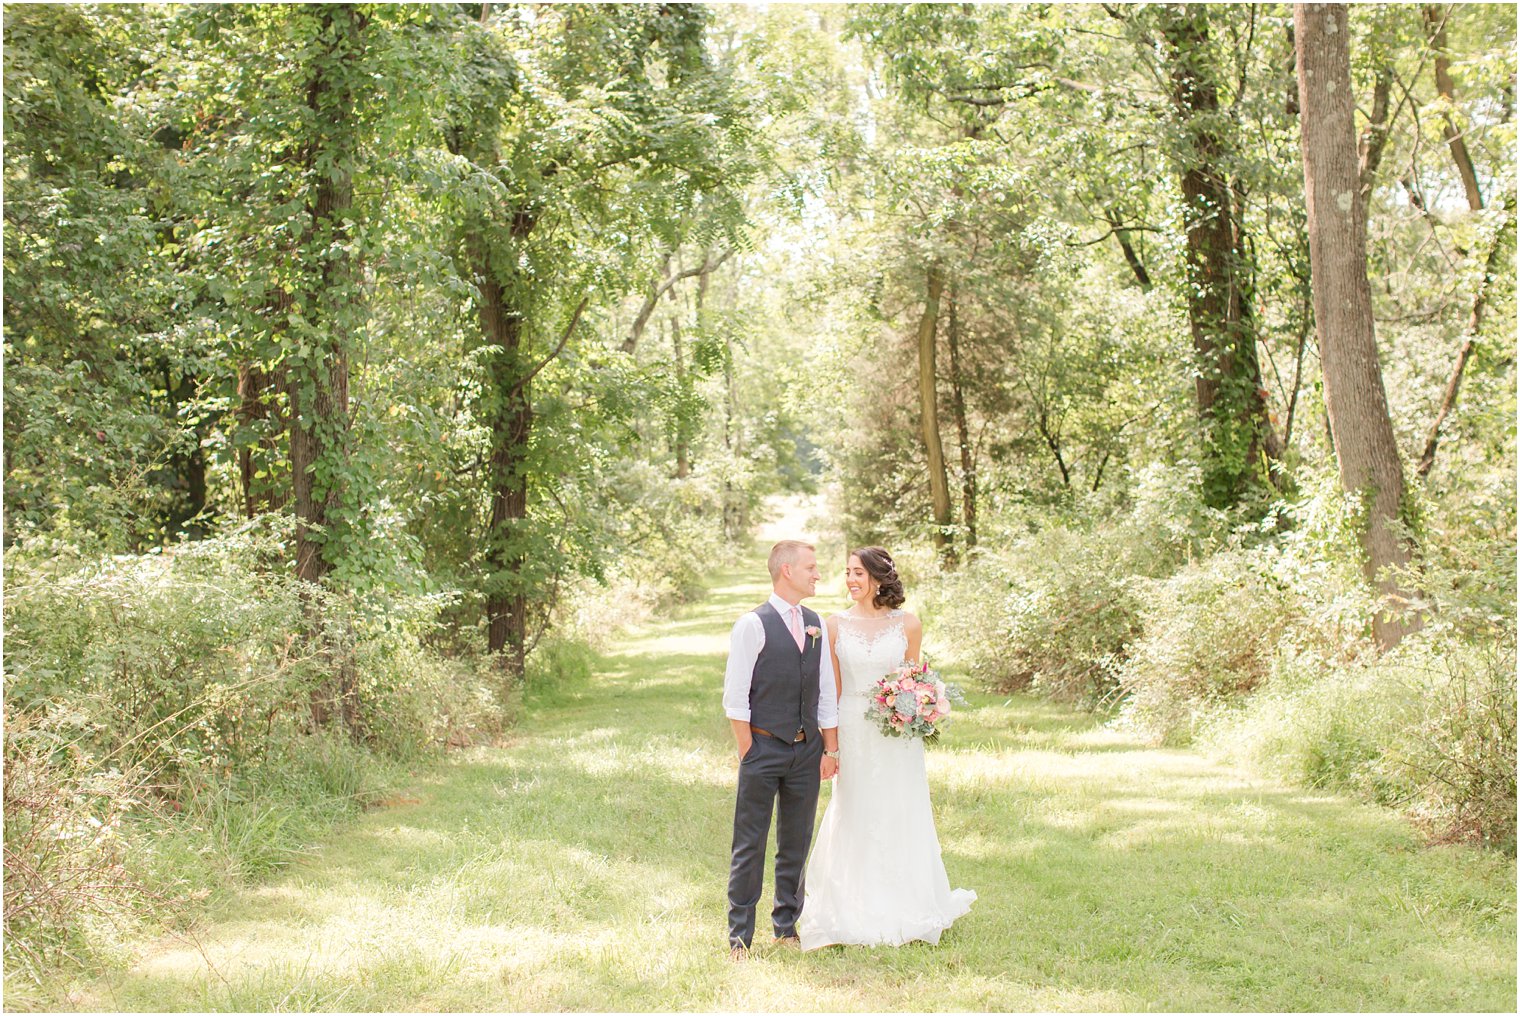 Stone Rows Farm wedding photos